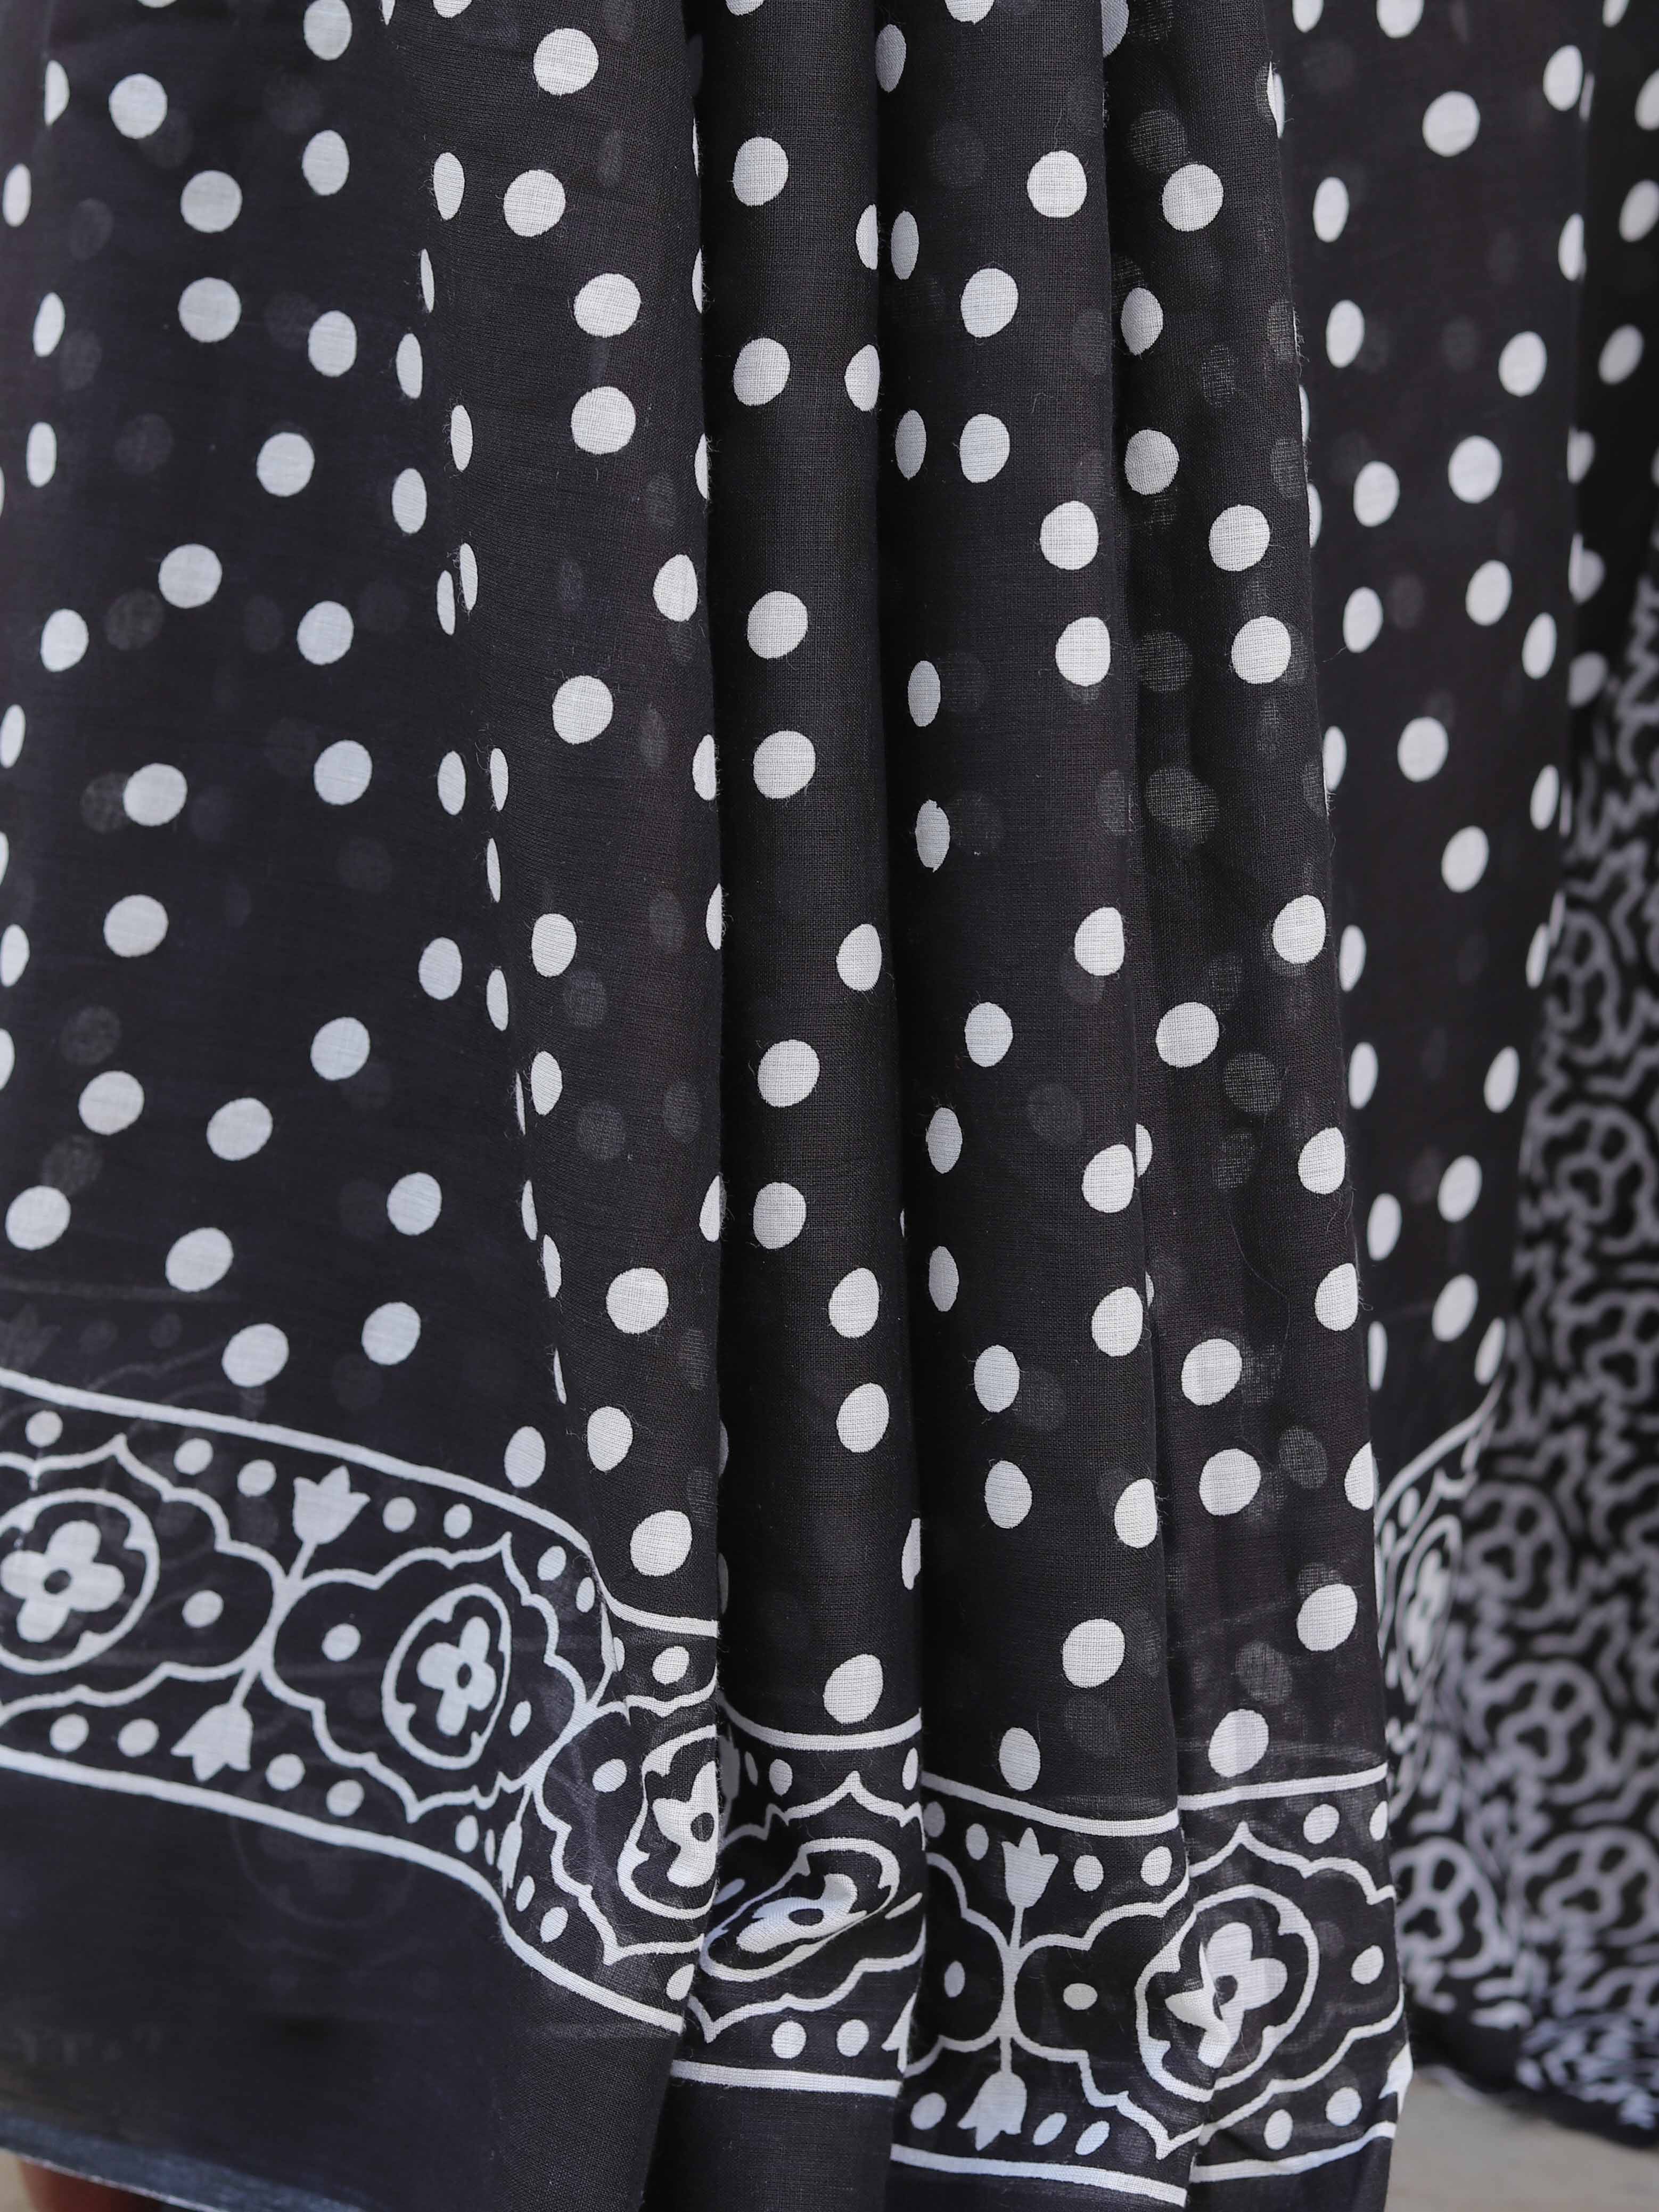 Handloom Mul Cotton Hand-block Print Saree-Black